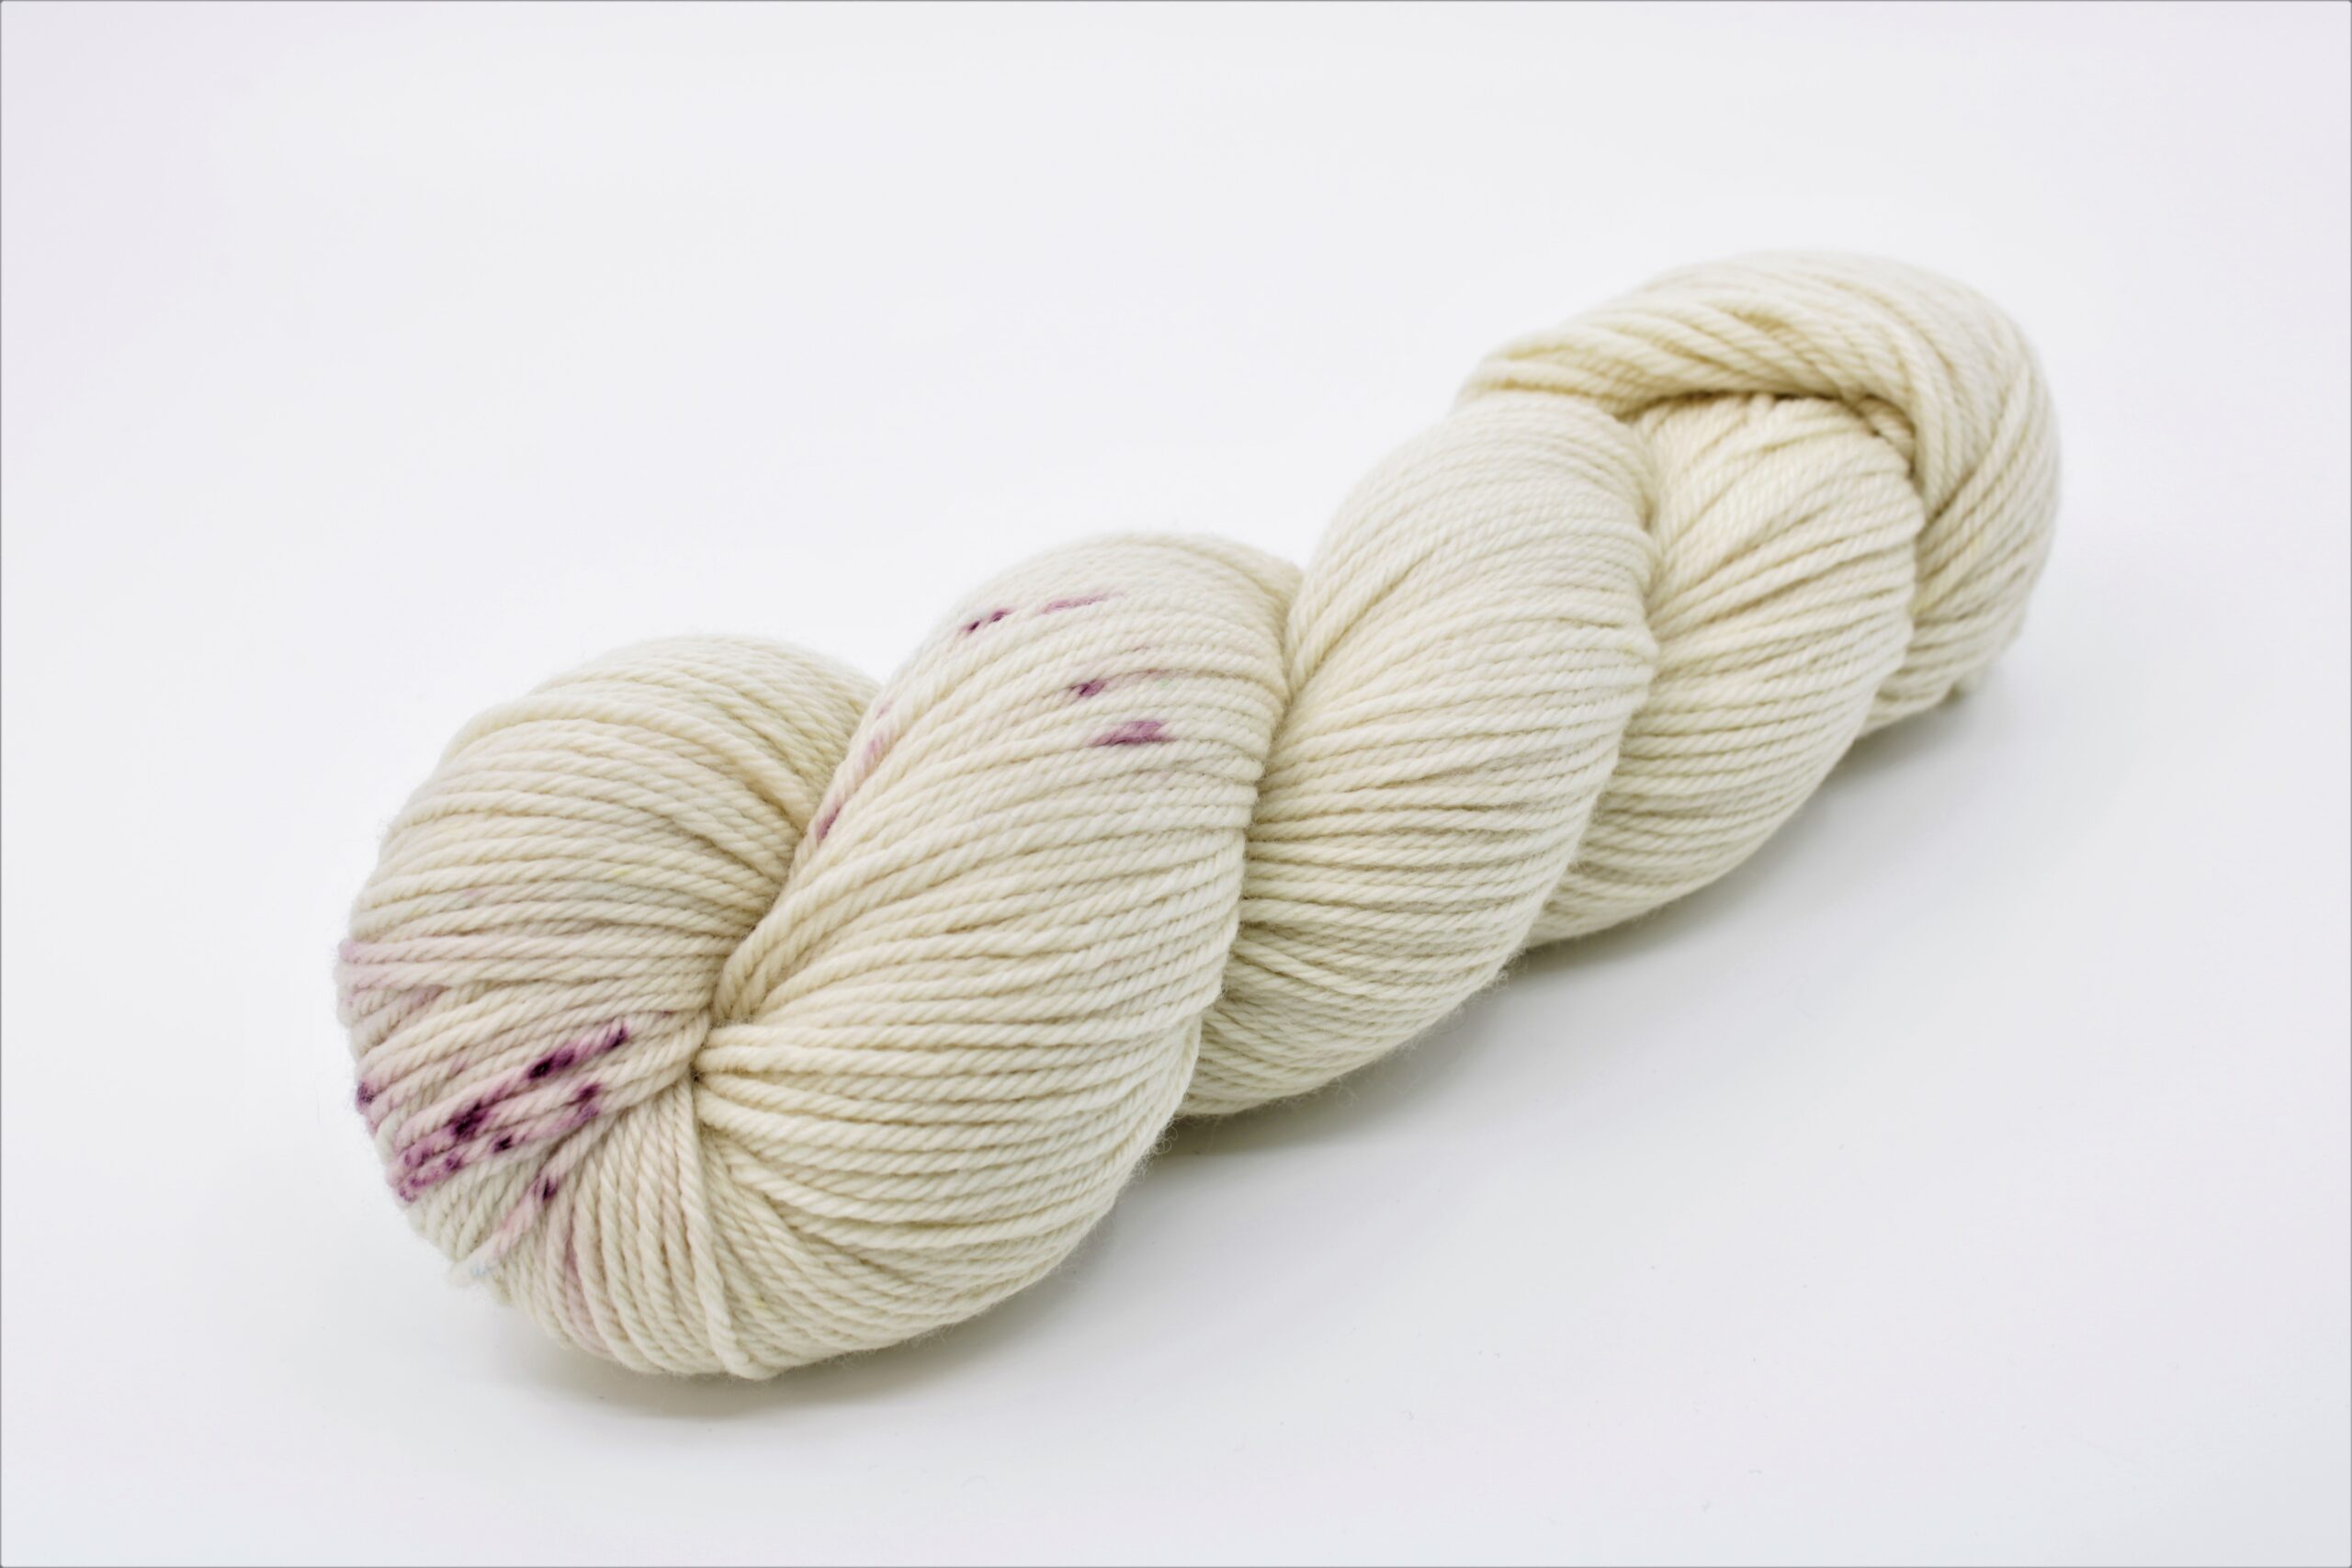 Fibrani wool, base: Flocon DK. Wool 100% merino untreated. Color: Amandine.